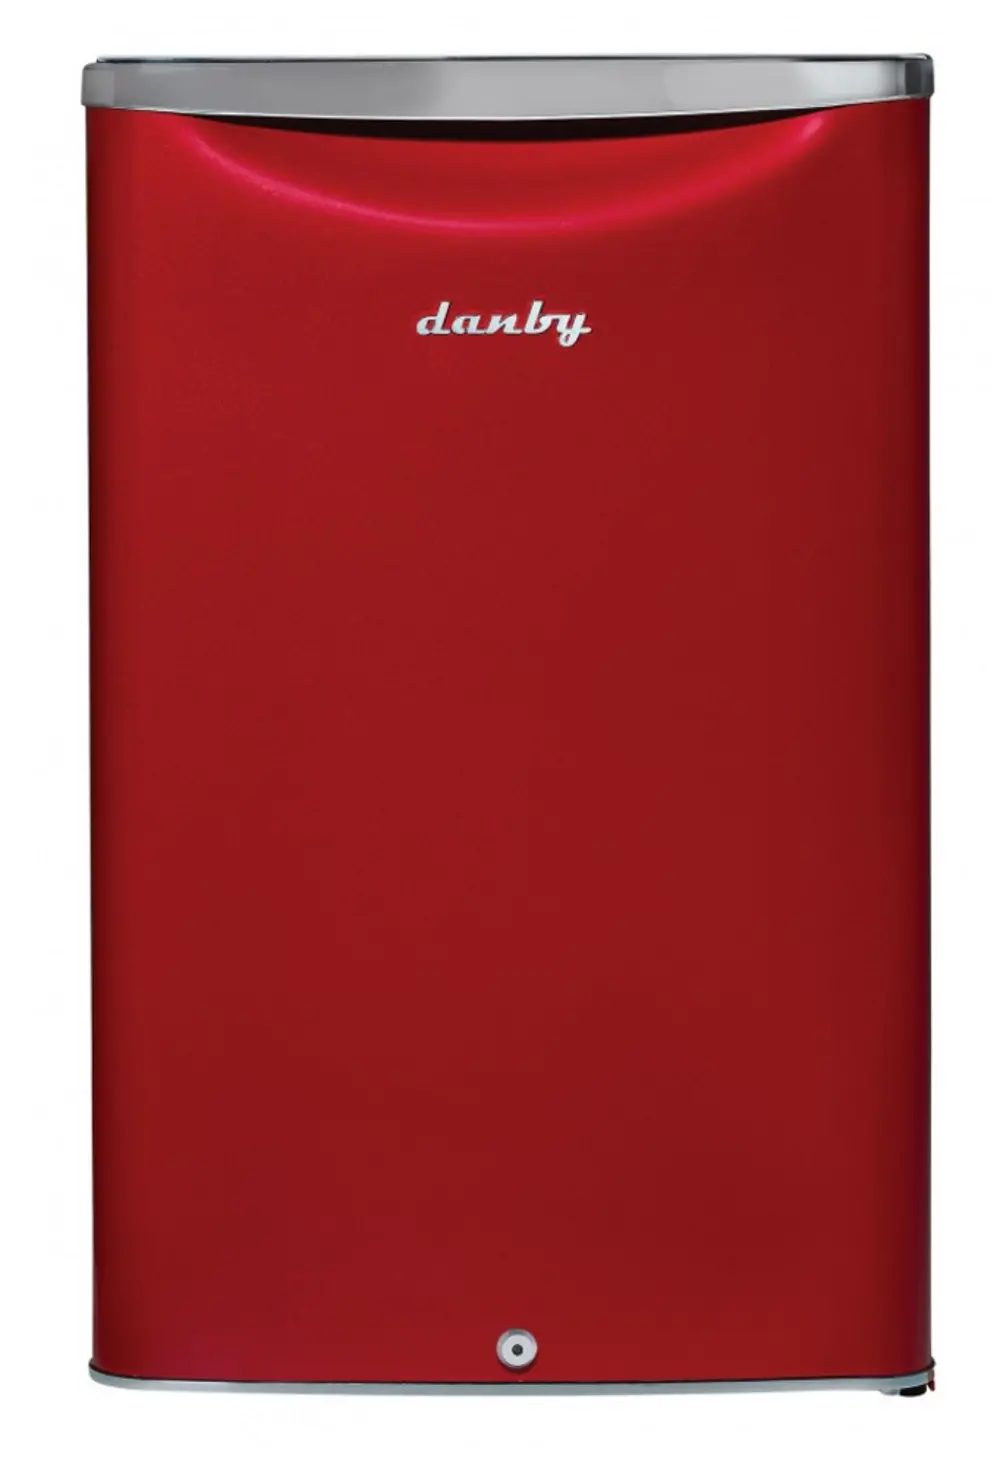 DAR044A6LDB Danby Compact Refrigerator - 20 W Red-1